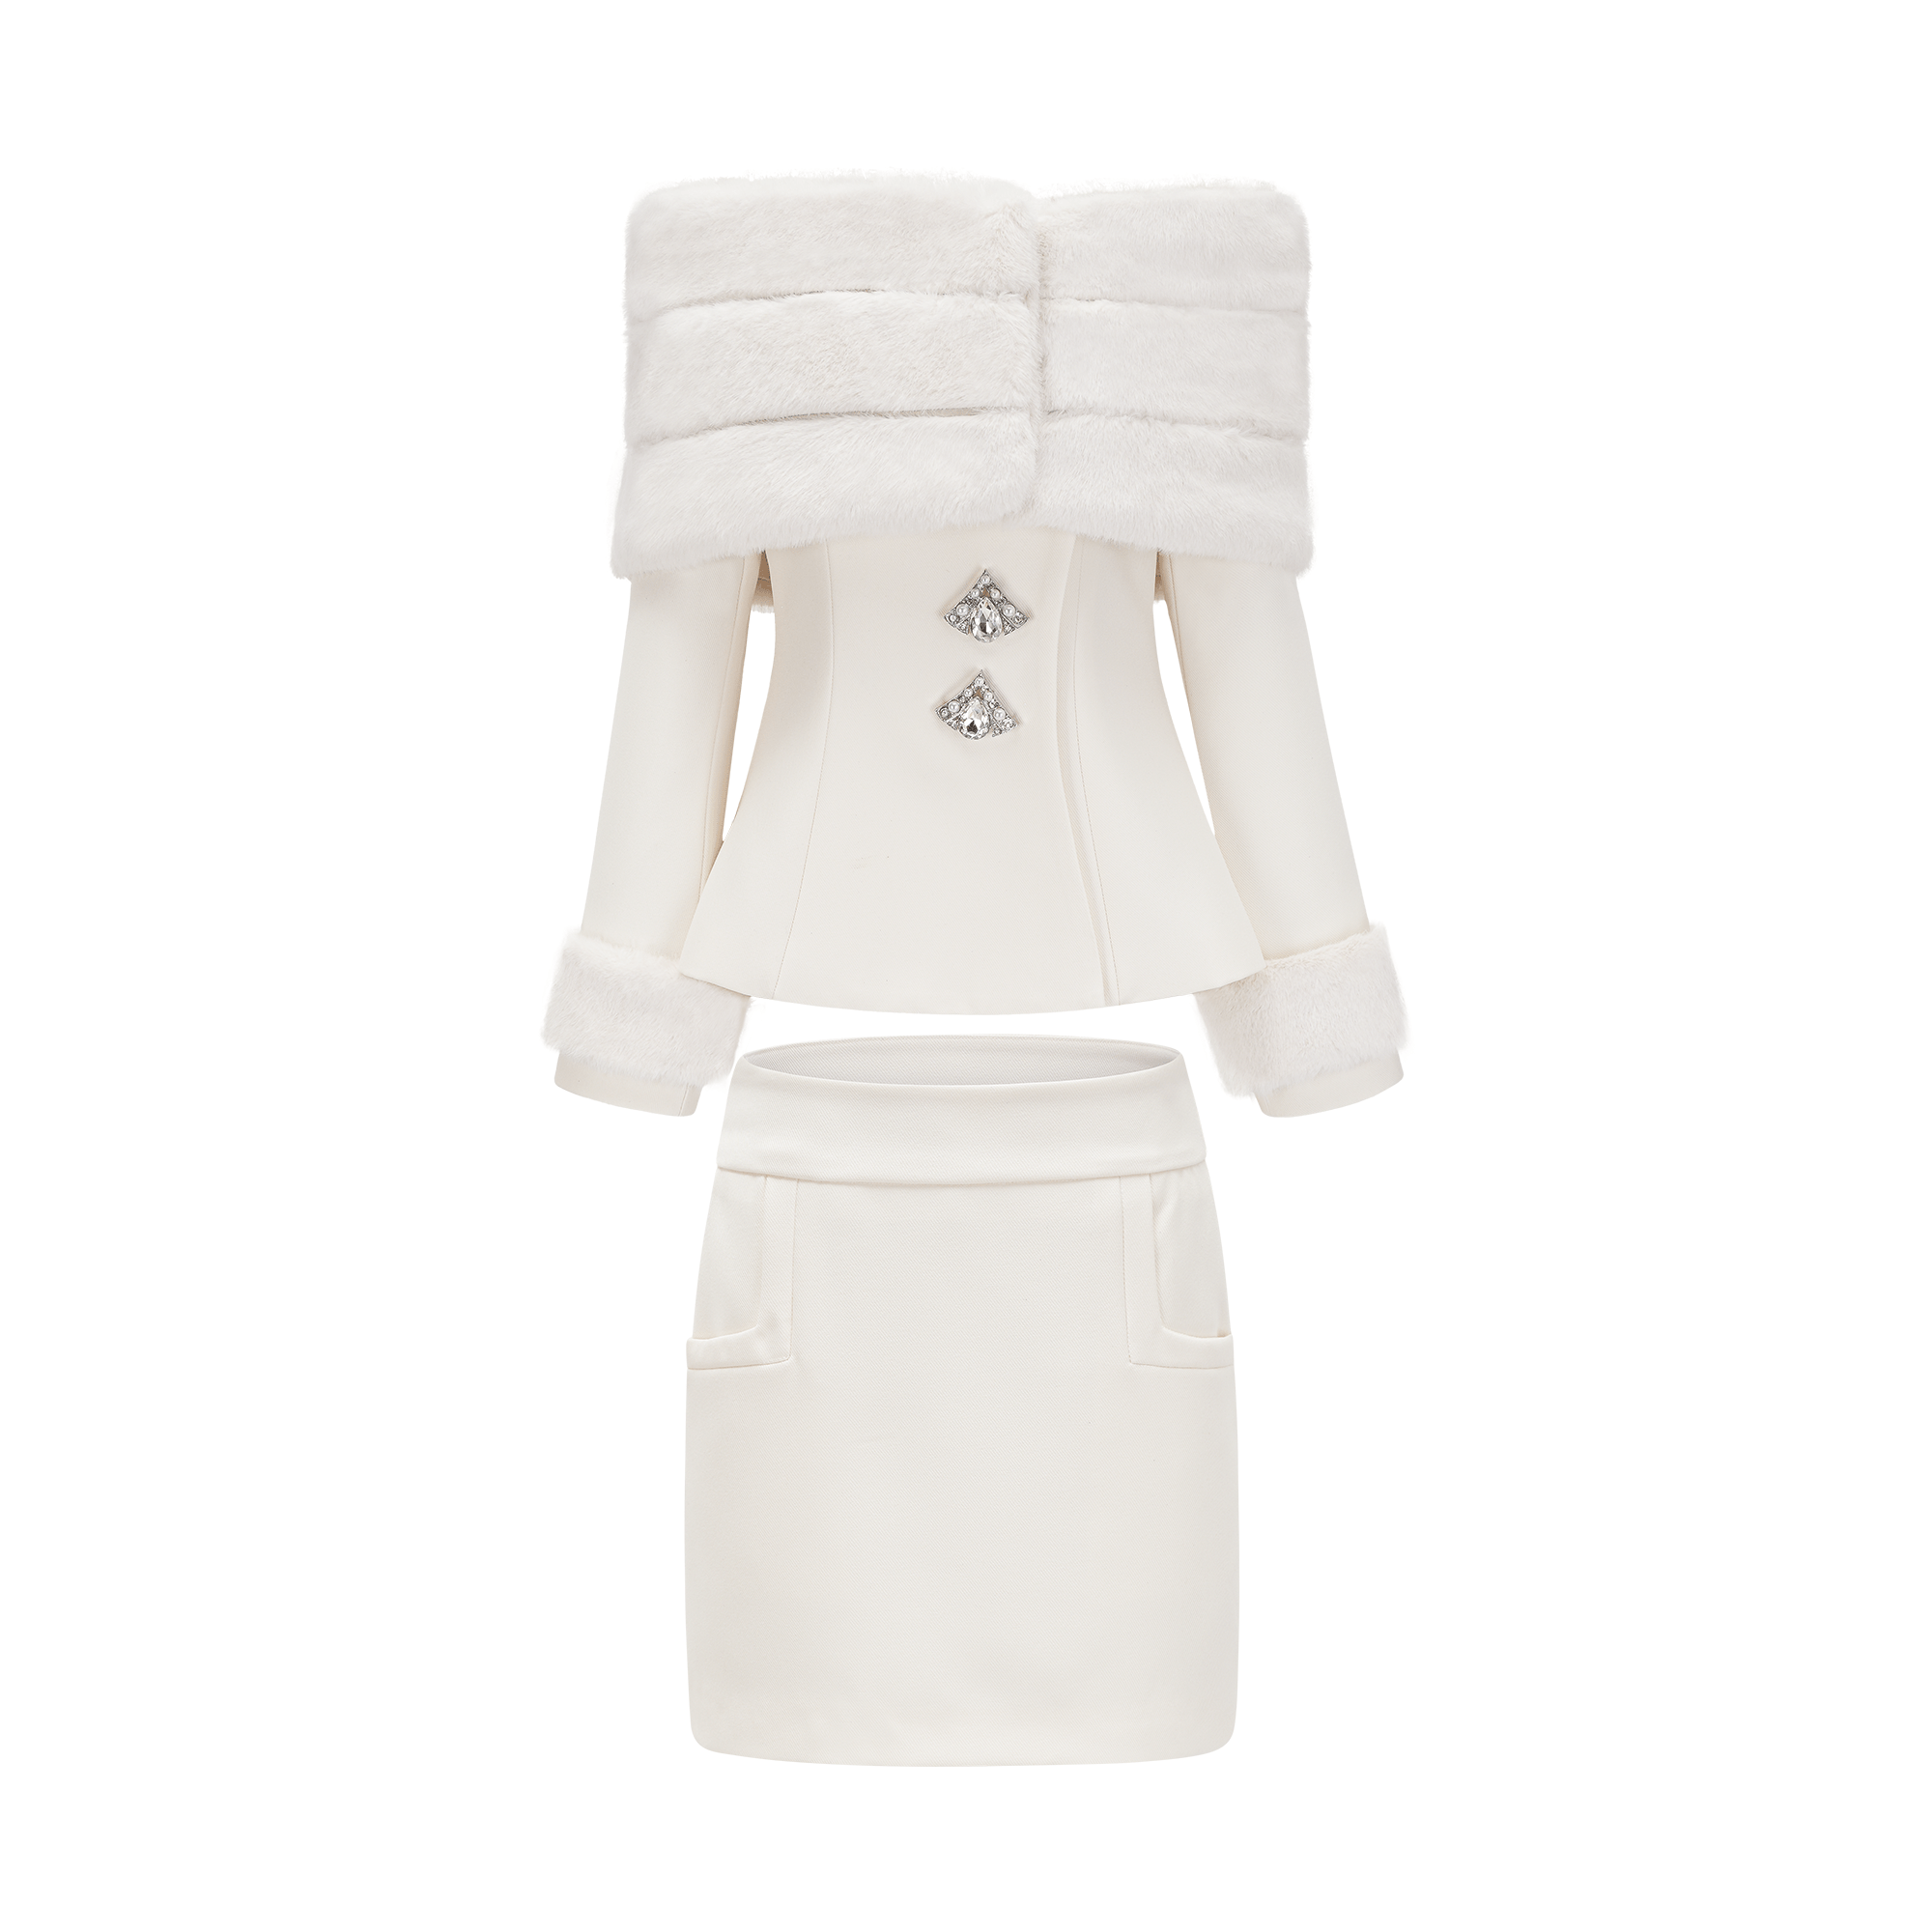 Caitlin fur jacket & skirt matching set - Miss Rosier - Women's Online Boutique